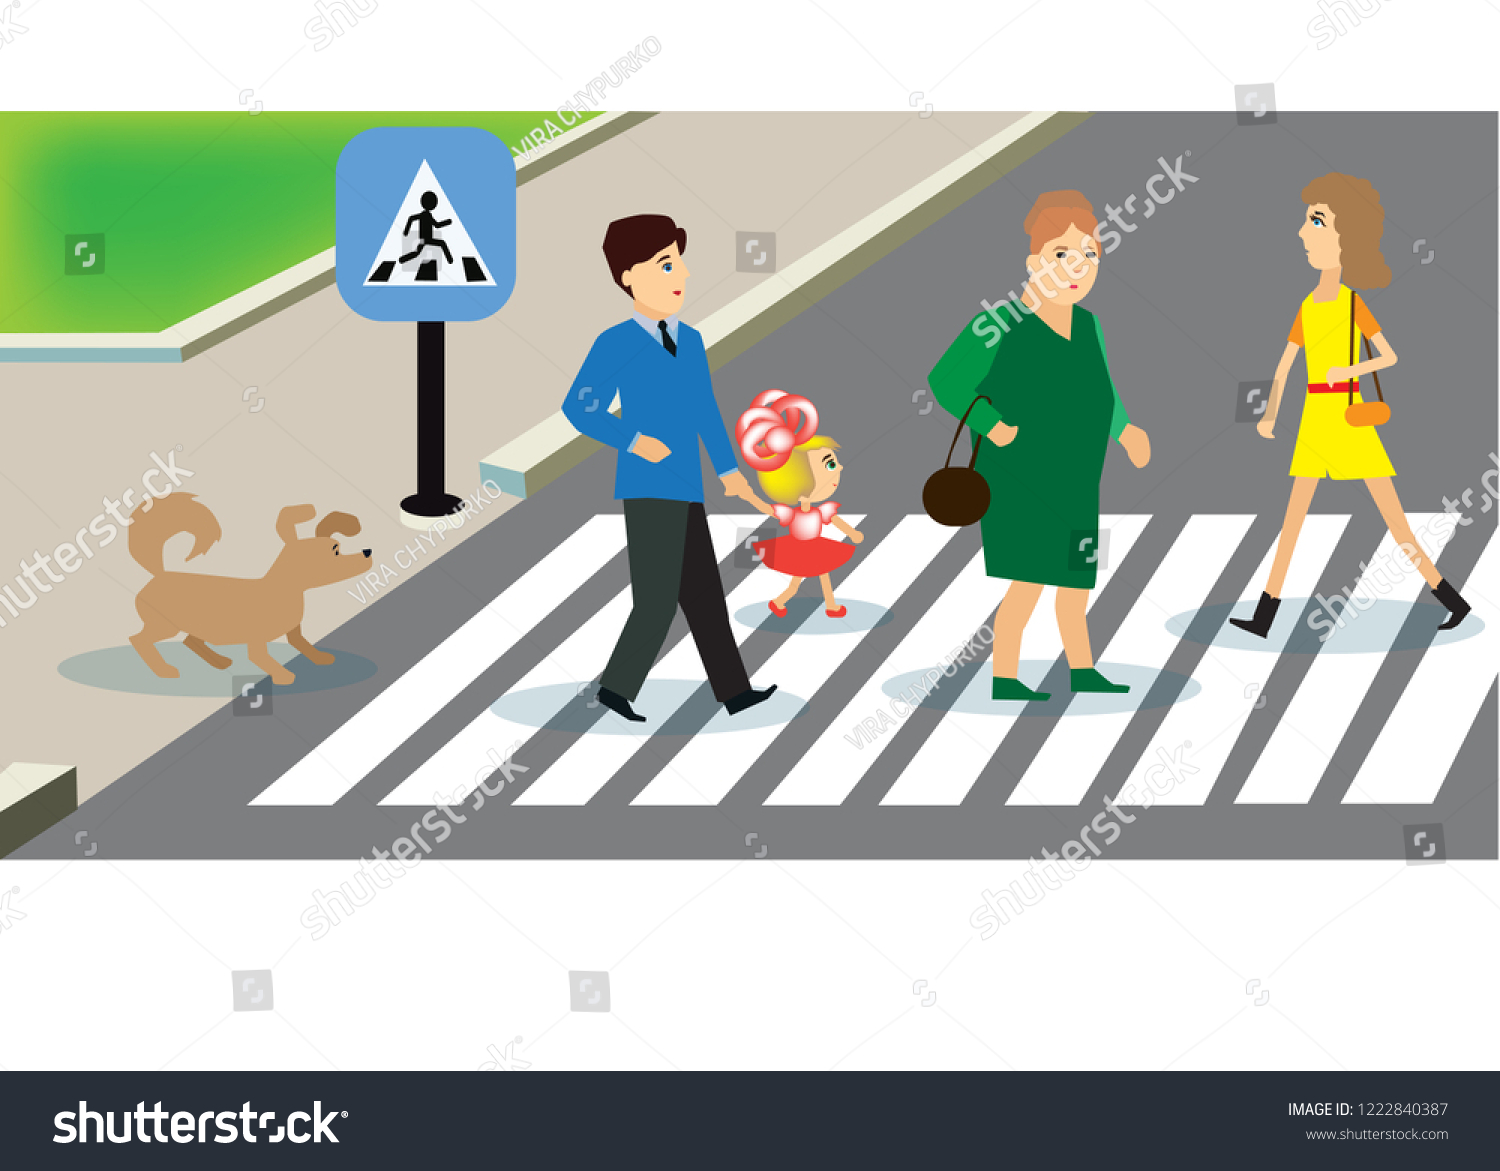 Pedestrians Cross Road Through Pedestrian Crossing Stock Vector Royalty Free